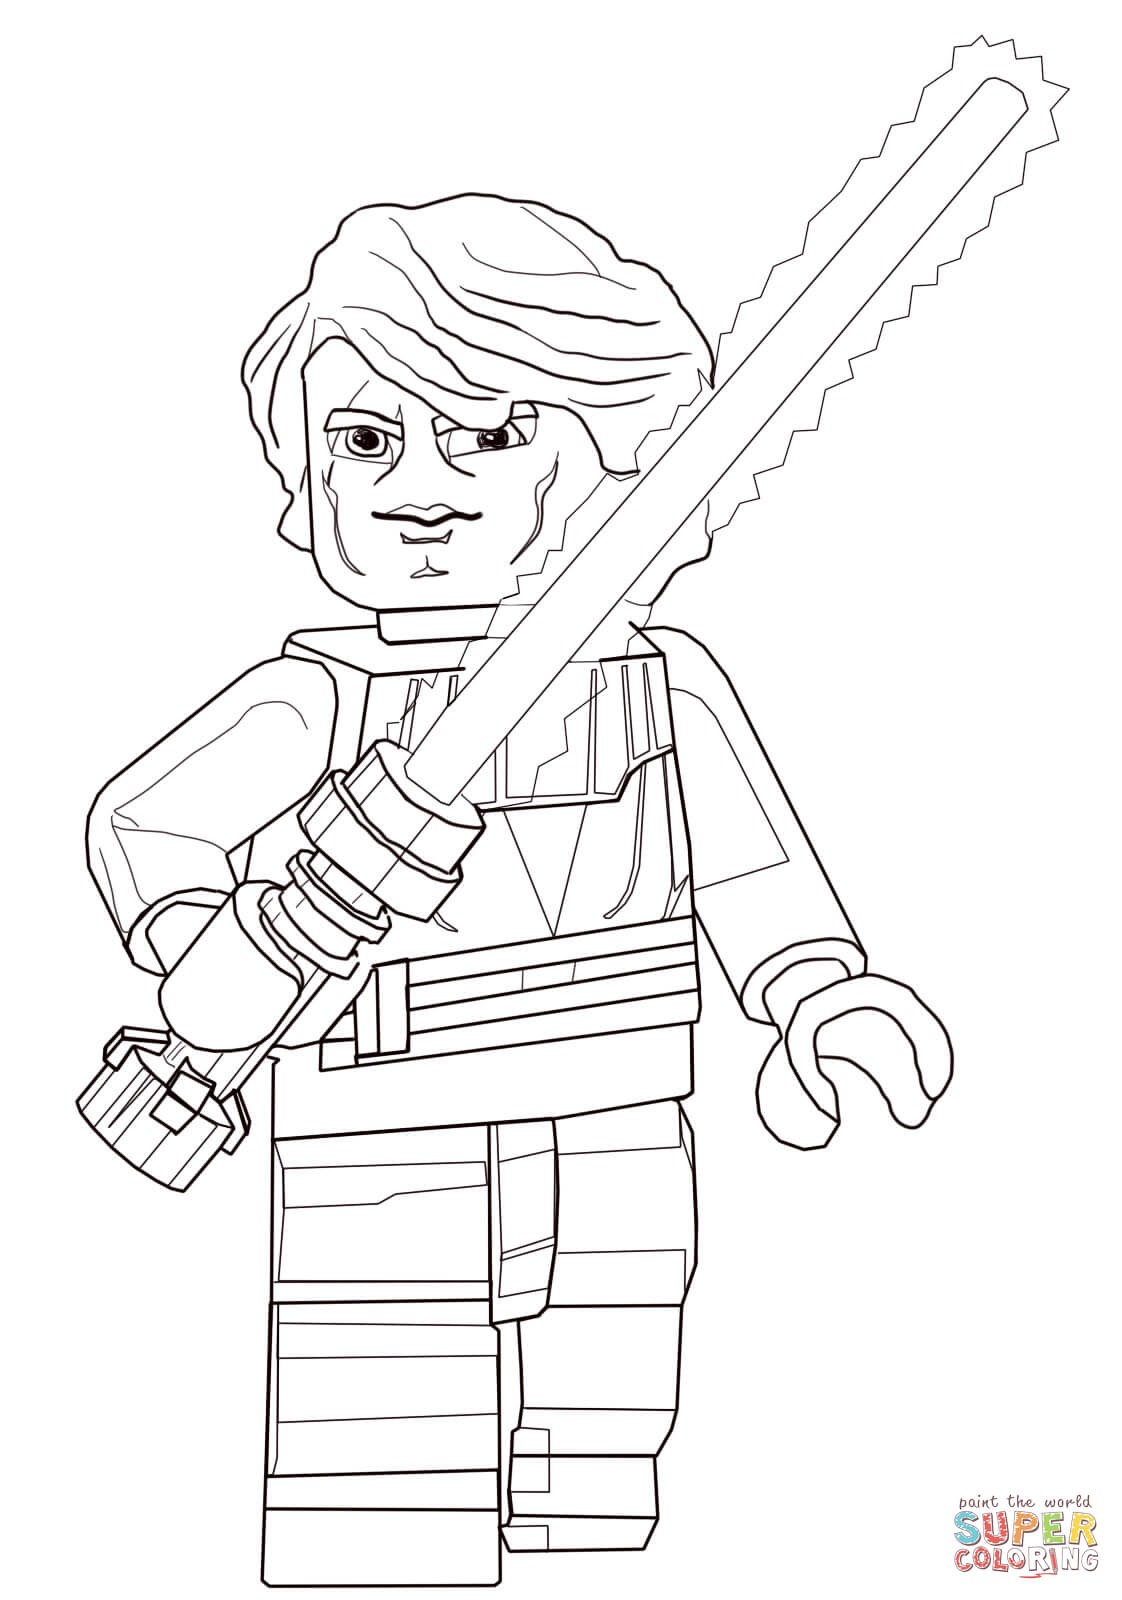 Lego Star Wars Anakin Skywalker coloring page | Free Printable